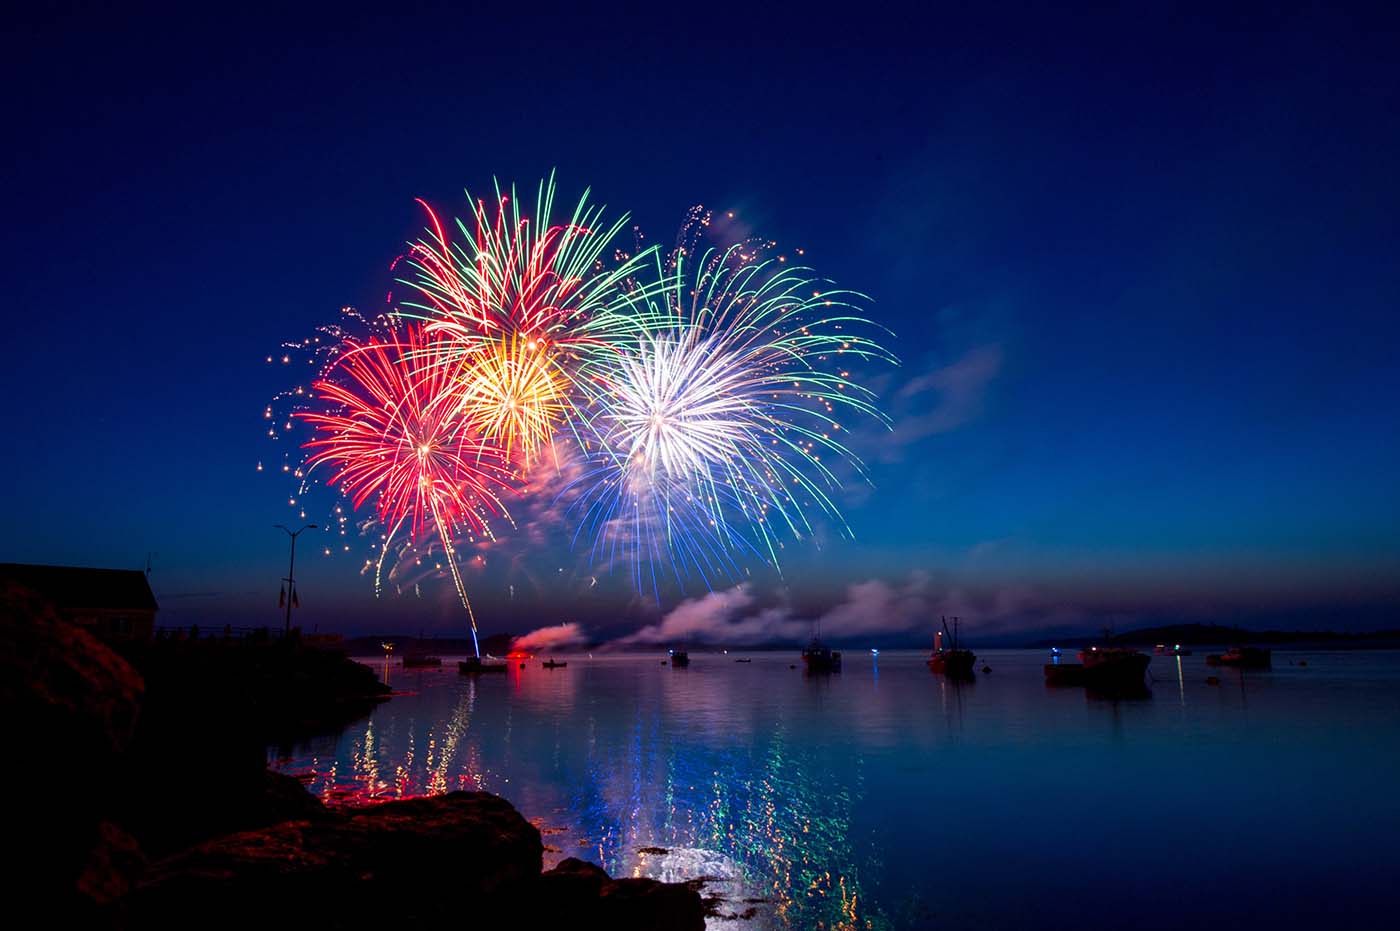 Image of fireworks